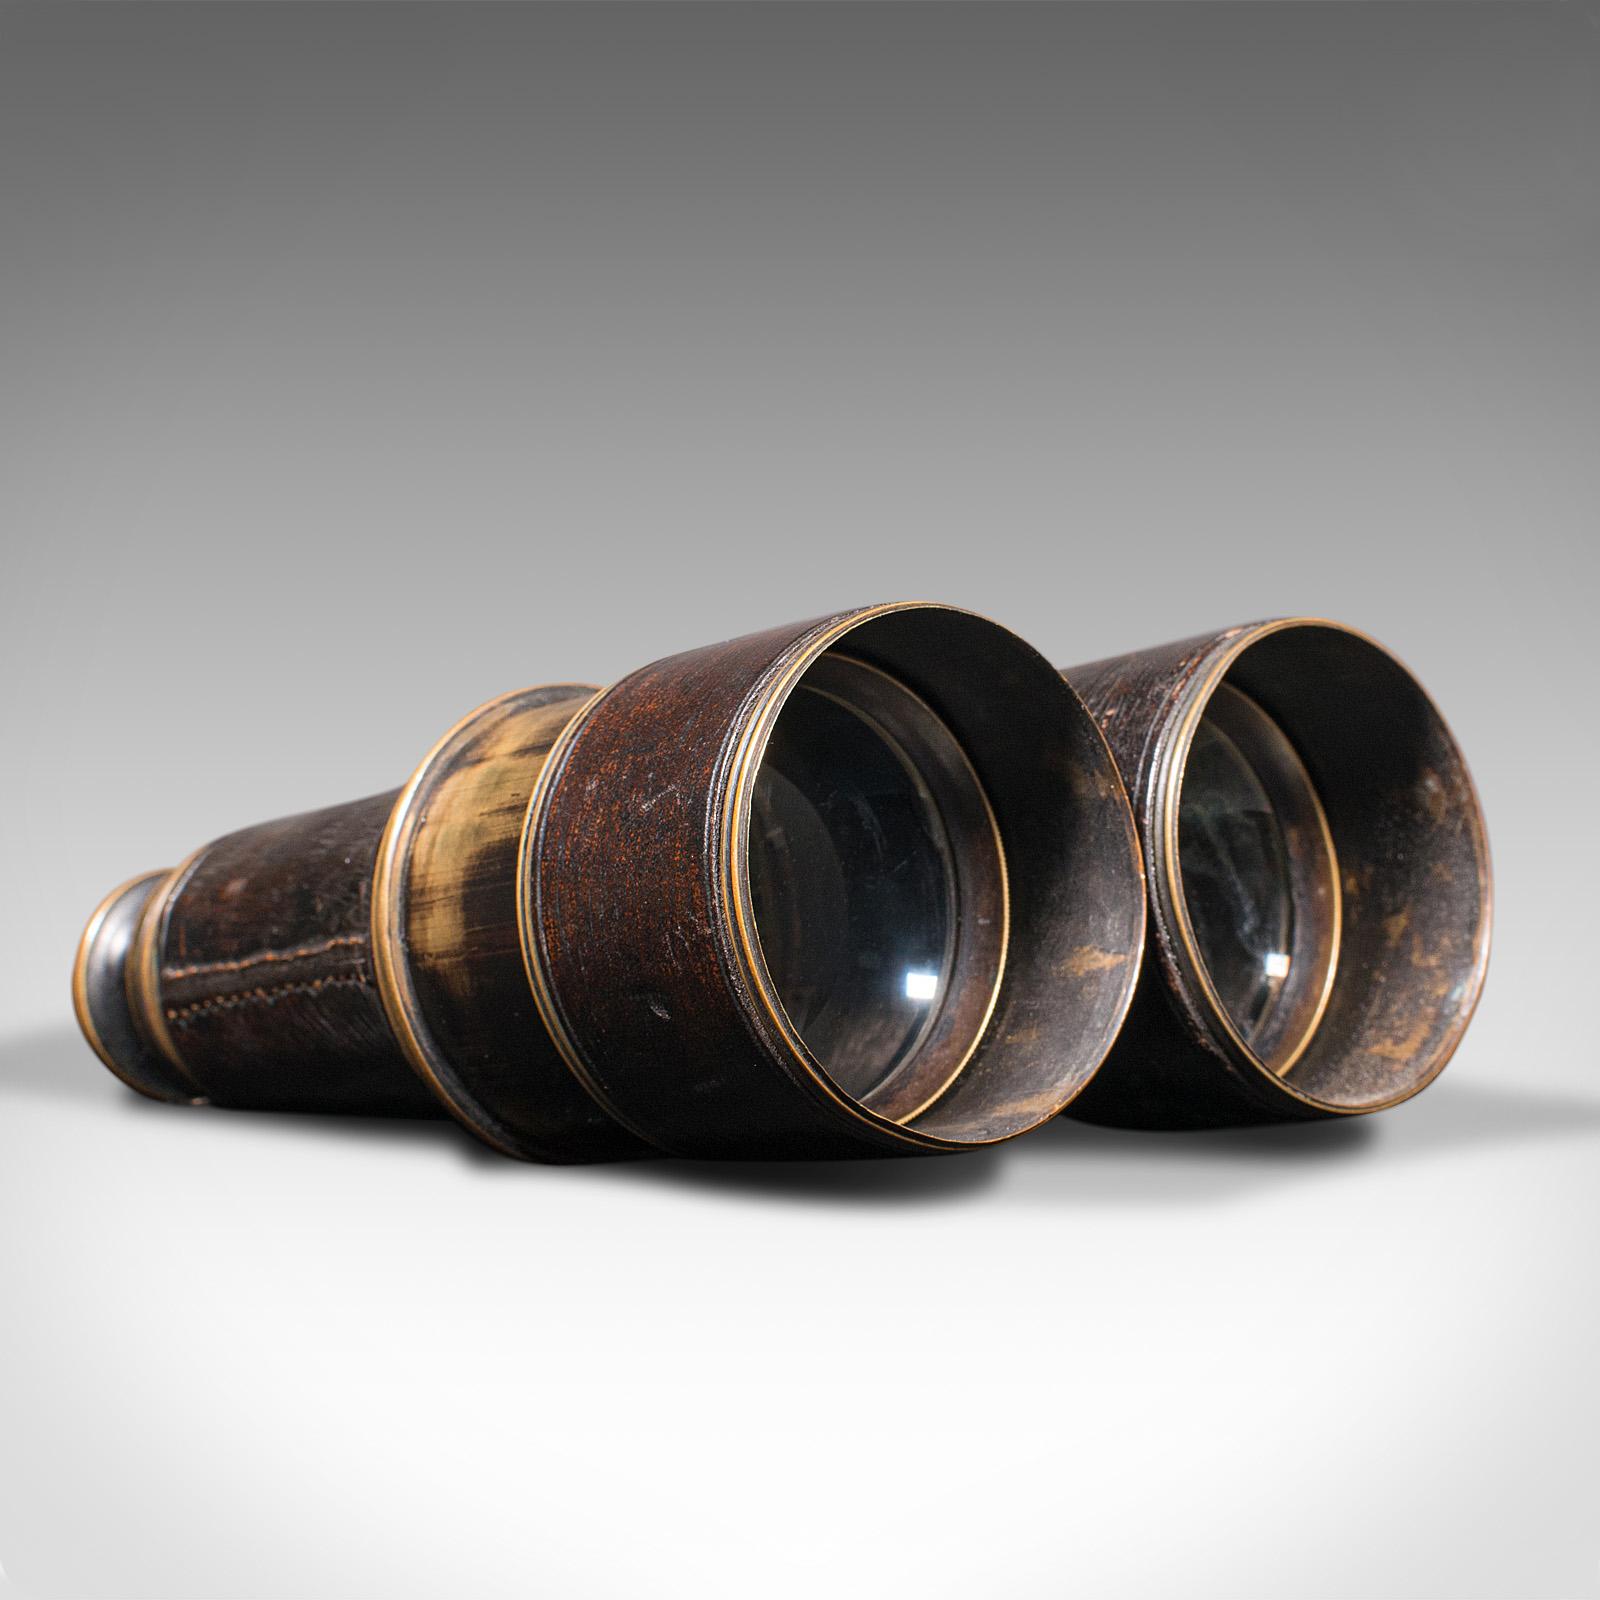 British Pair of Antique Binoculars, English, Brass, Leather, Optical Instrument, c.1920